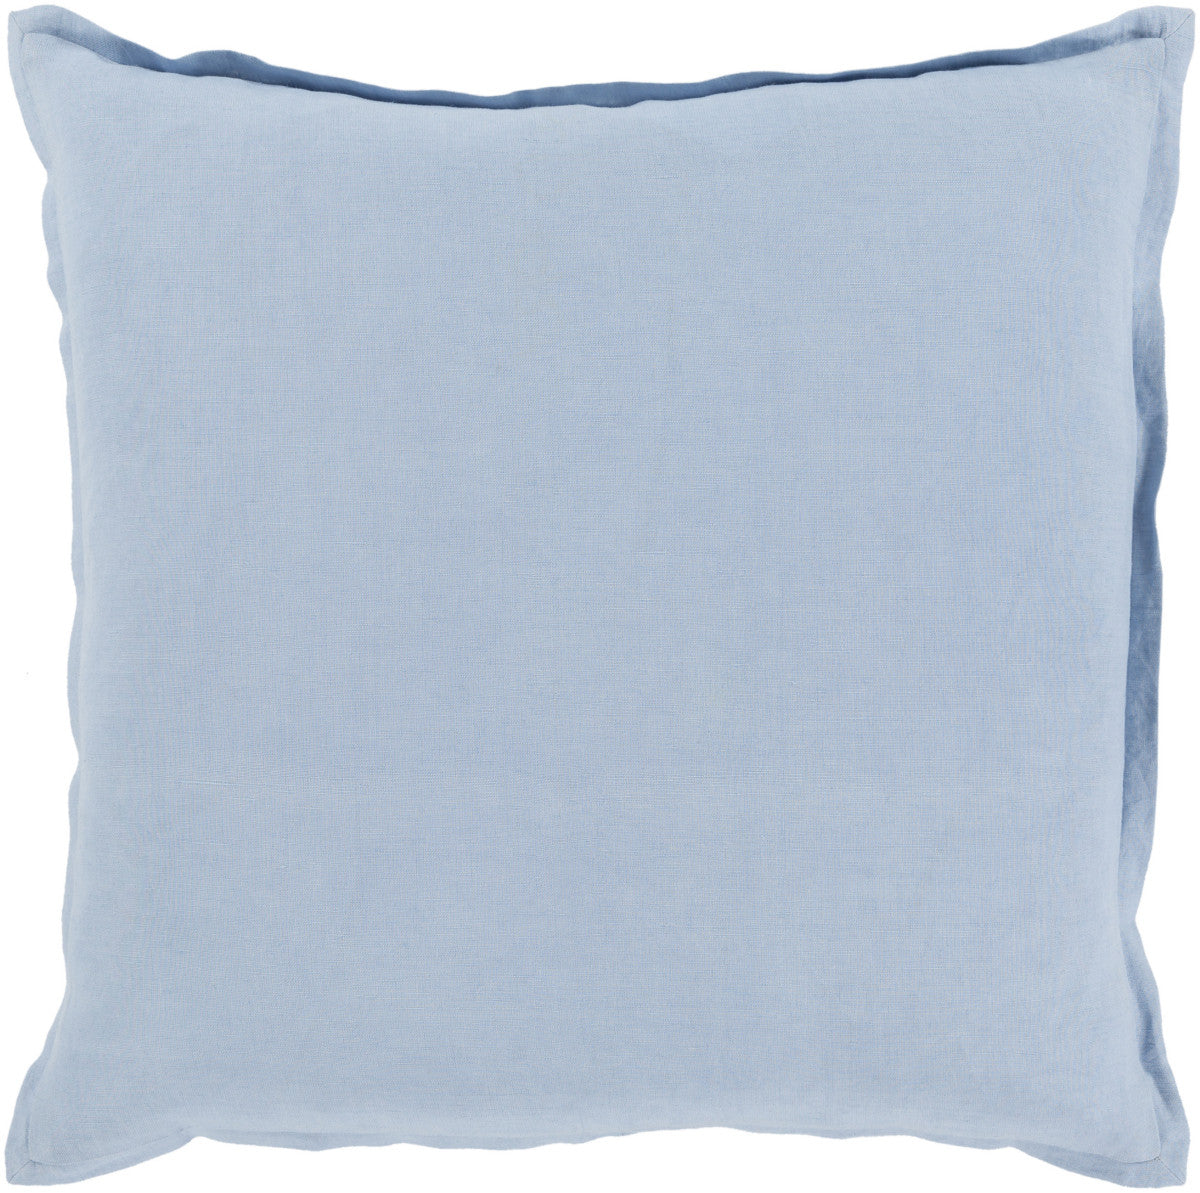 Surya Orianna OR012 Pillow